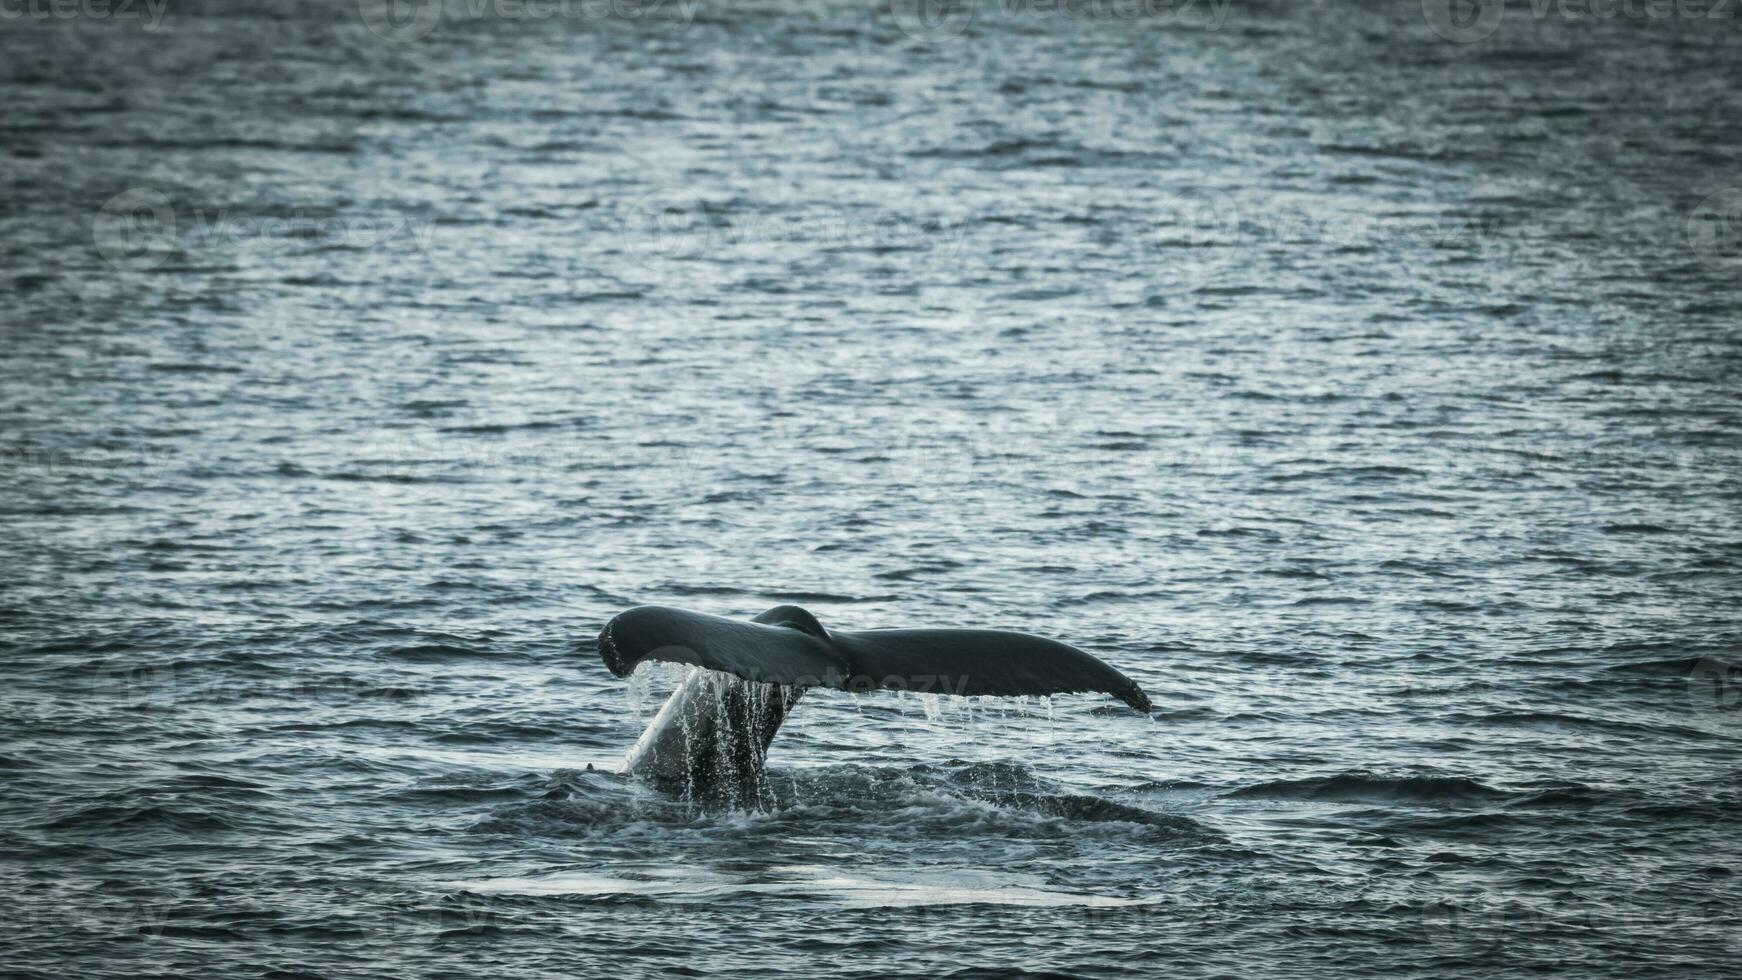 corcunda baleia mergulho, megaptera novaeangliae,antrtica. foto